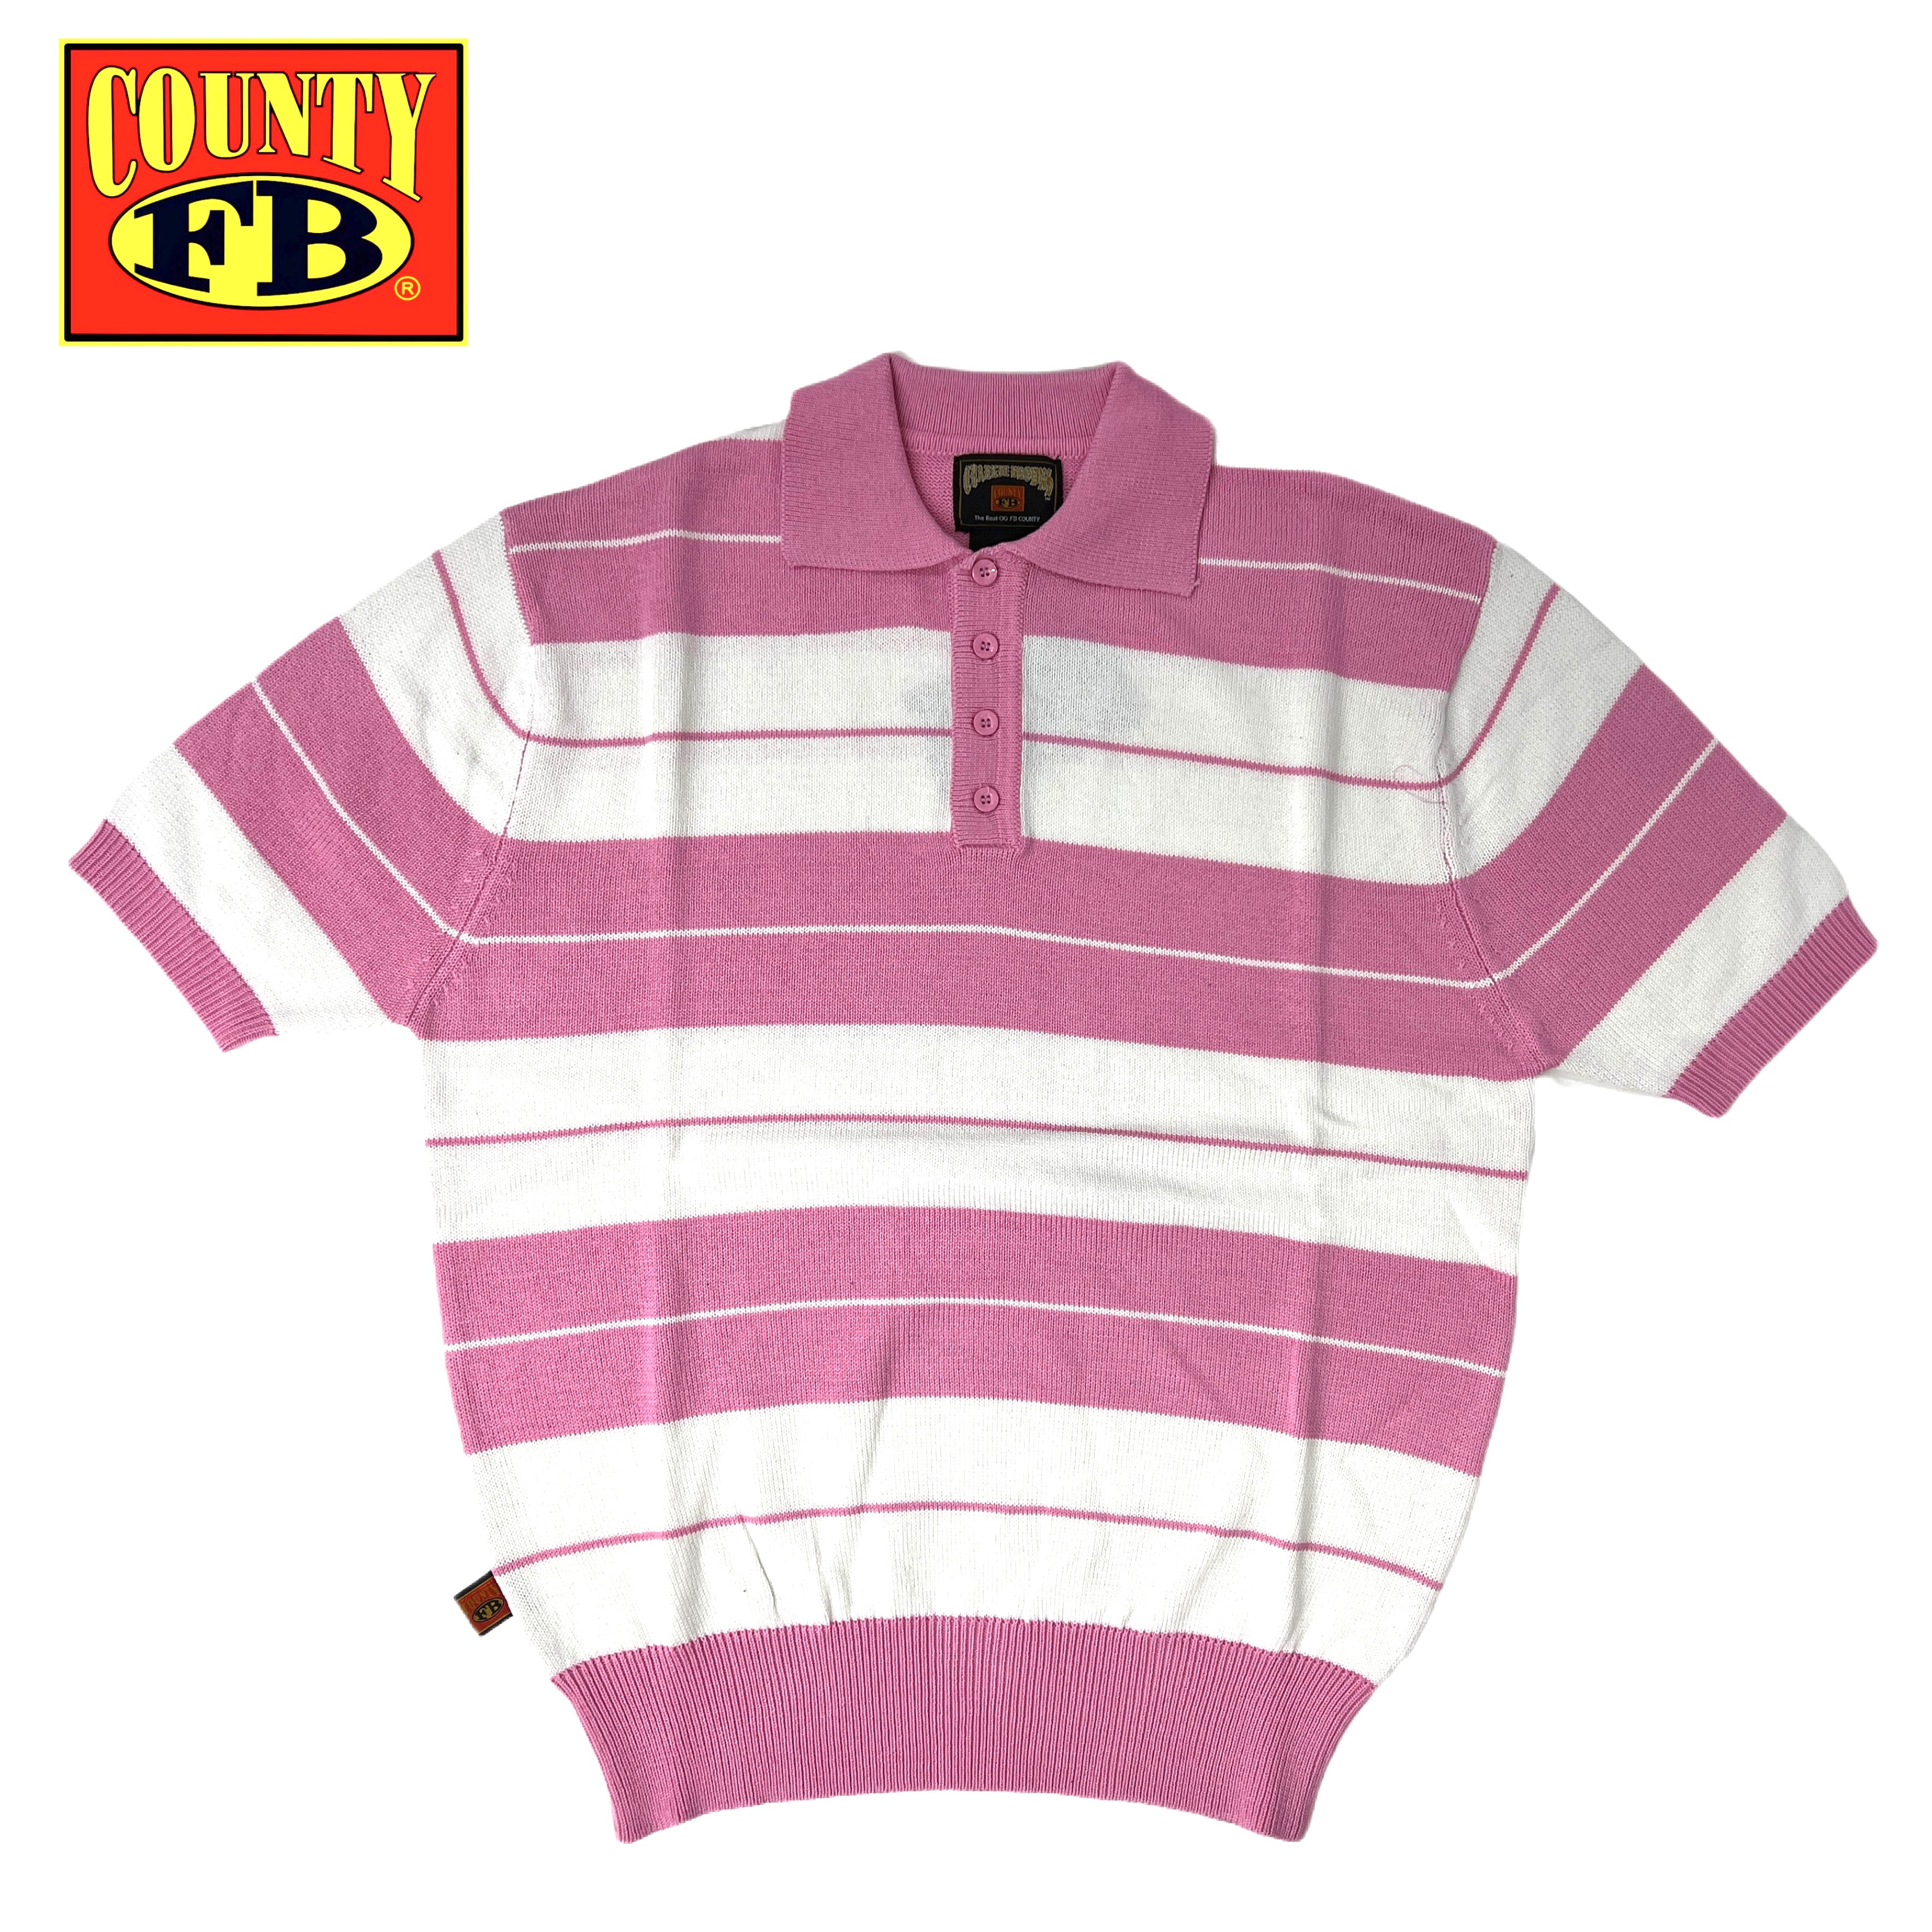 FB County Charlie Brown Shirt - Pink/White & Navy/White